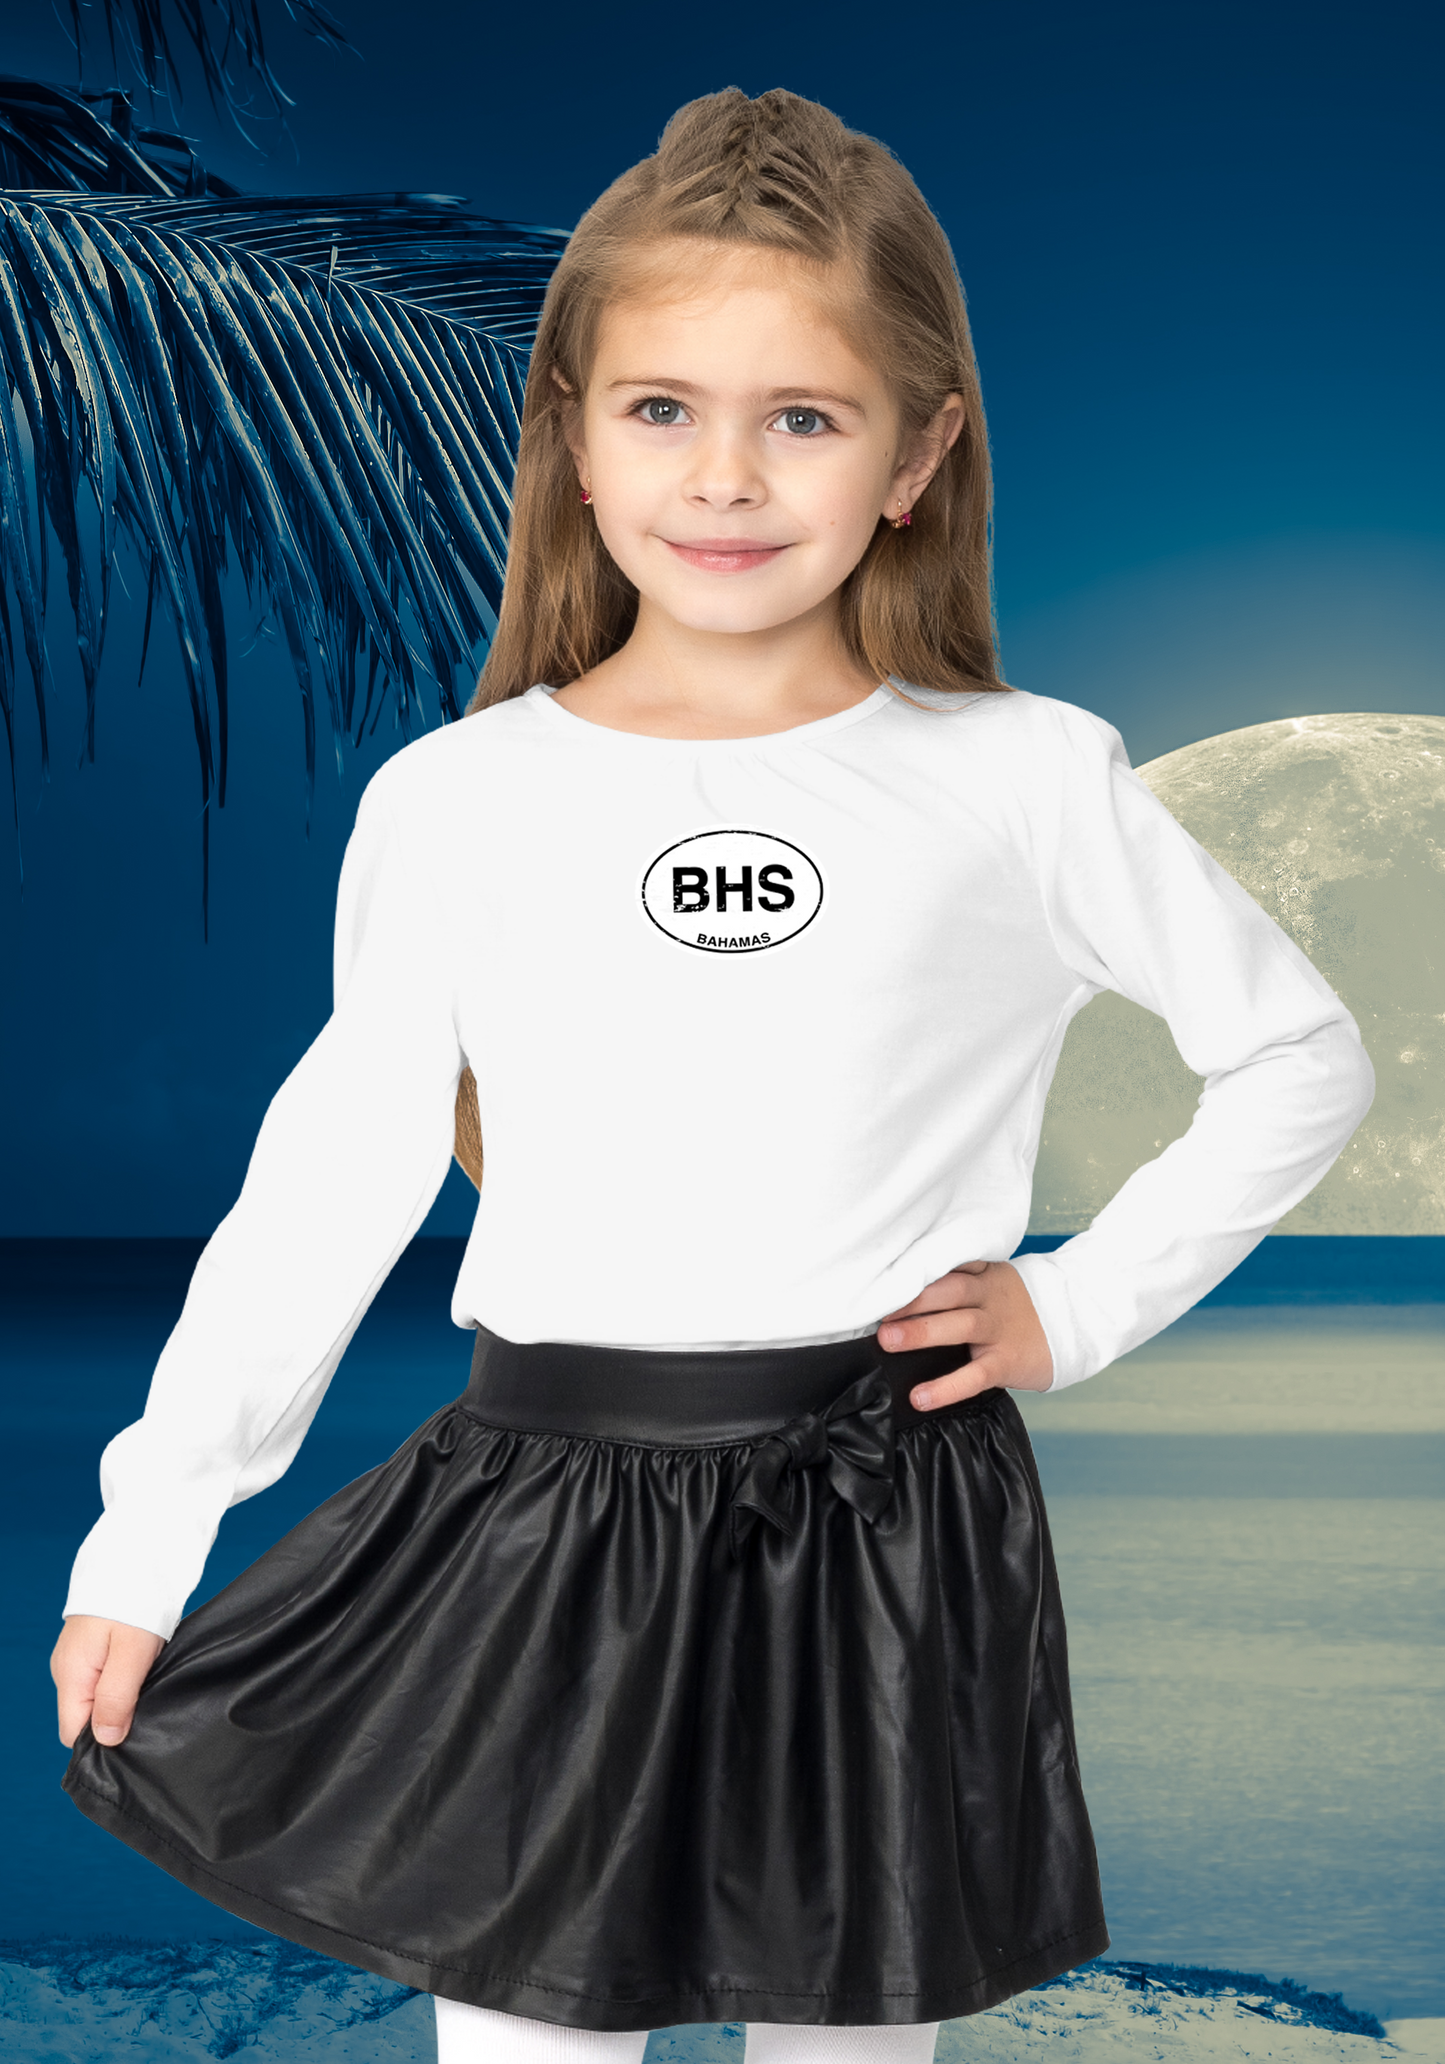 Bahamas Youth Classic Long Sleeve T-Shirts - My Destination Location